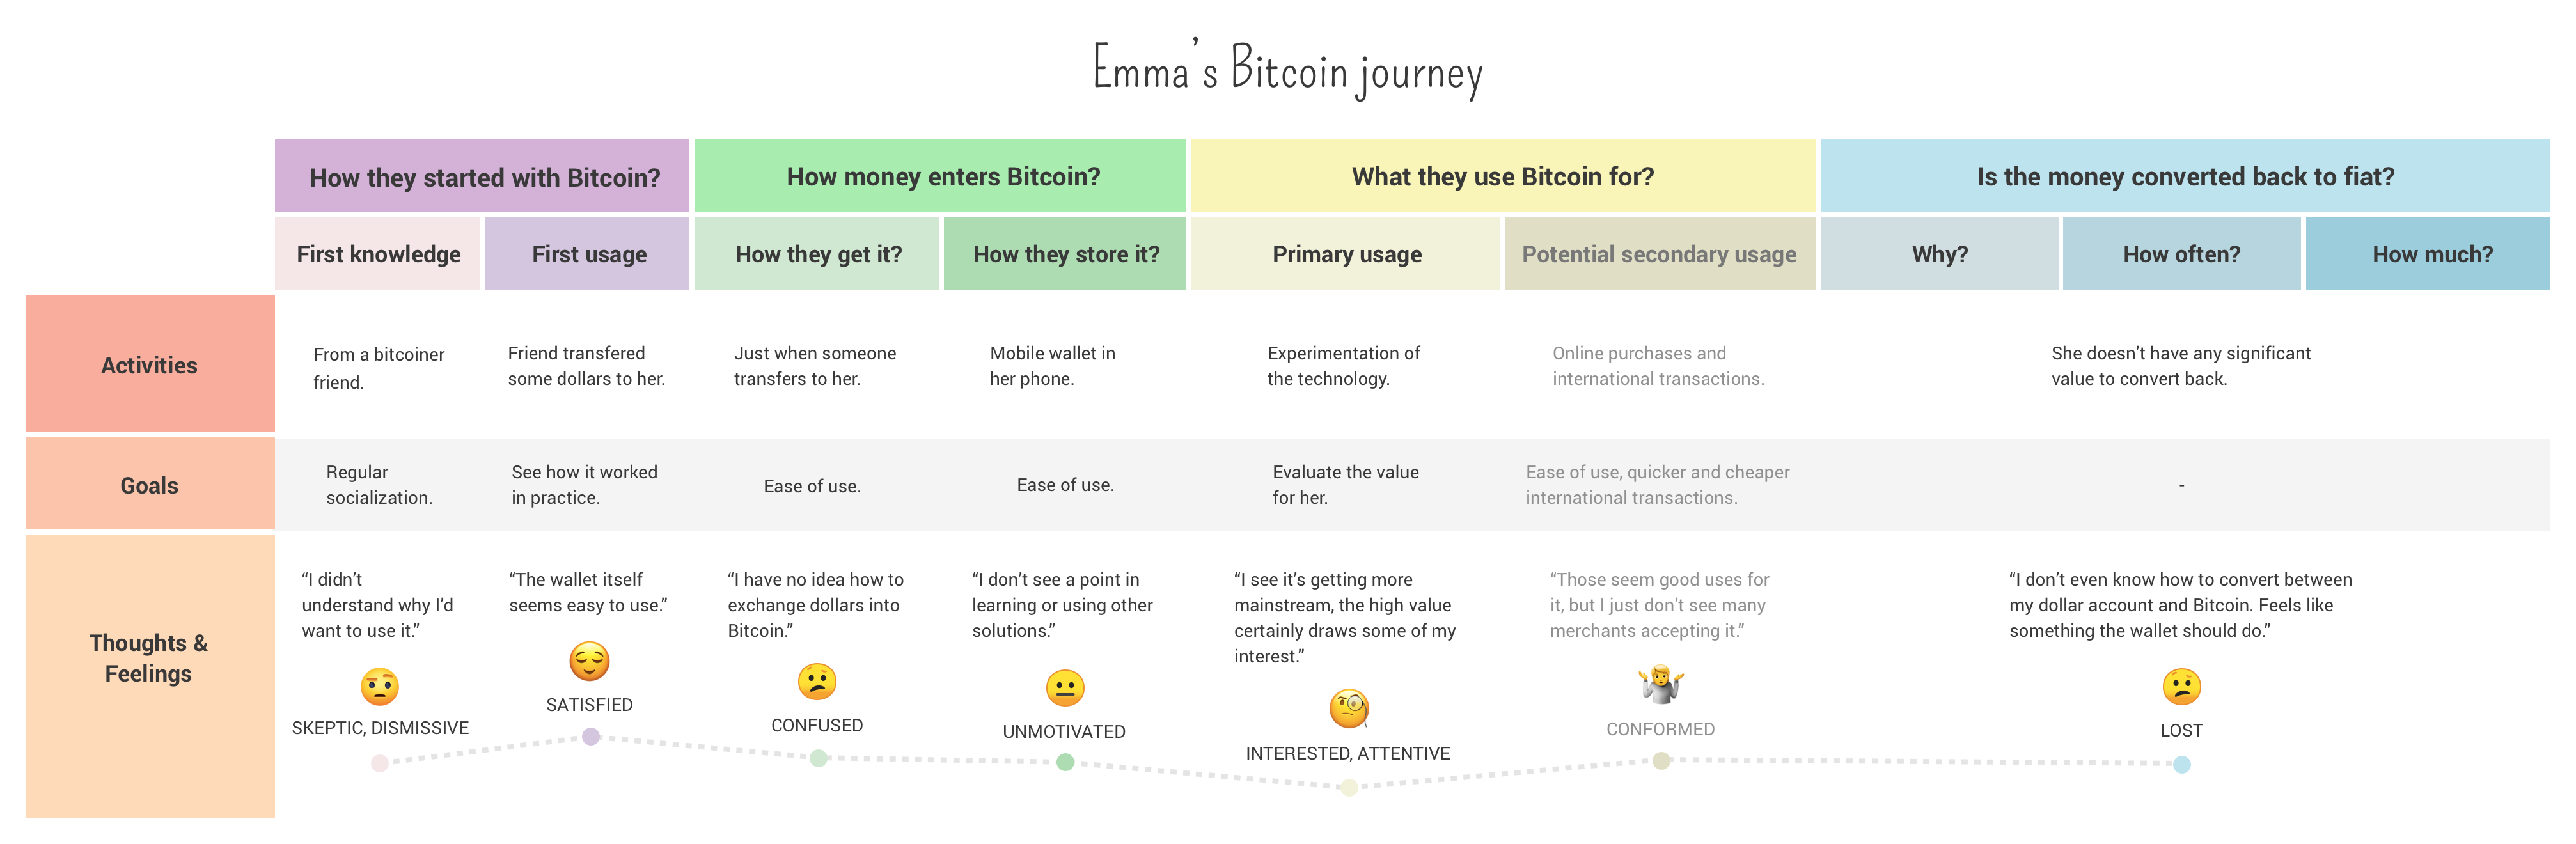 Emma’s Bitcoin journey